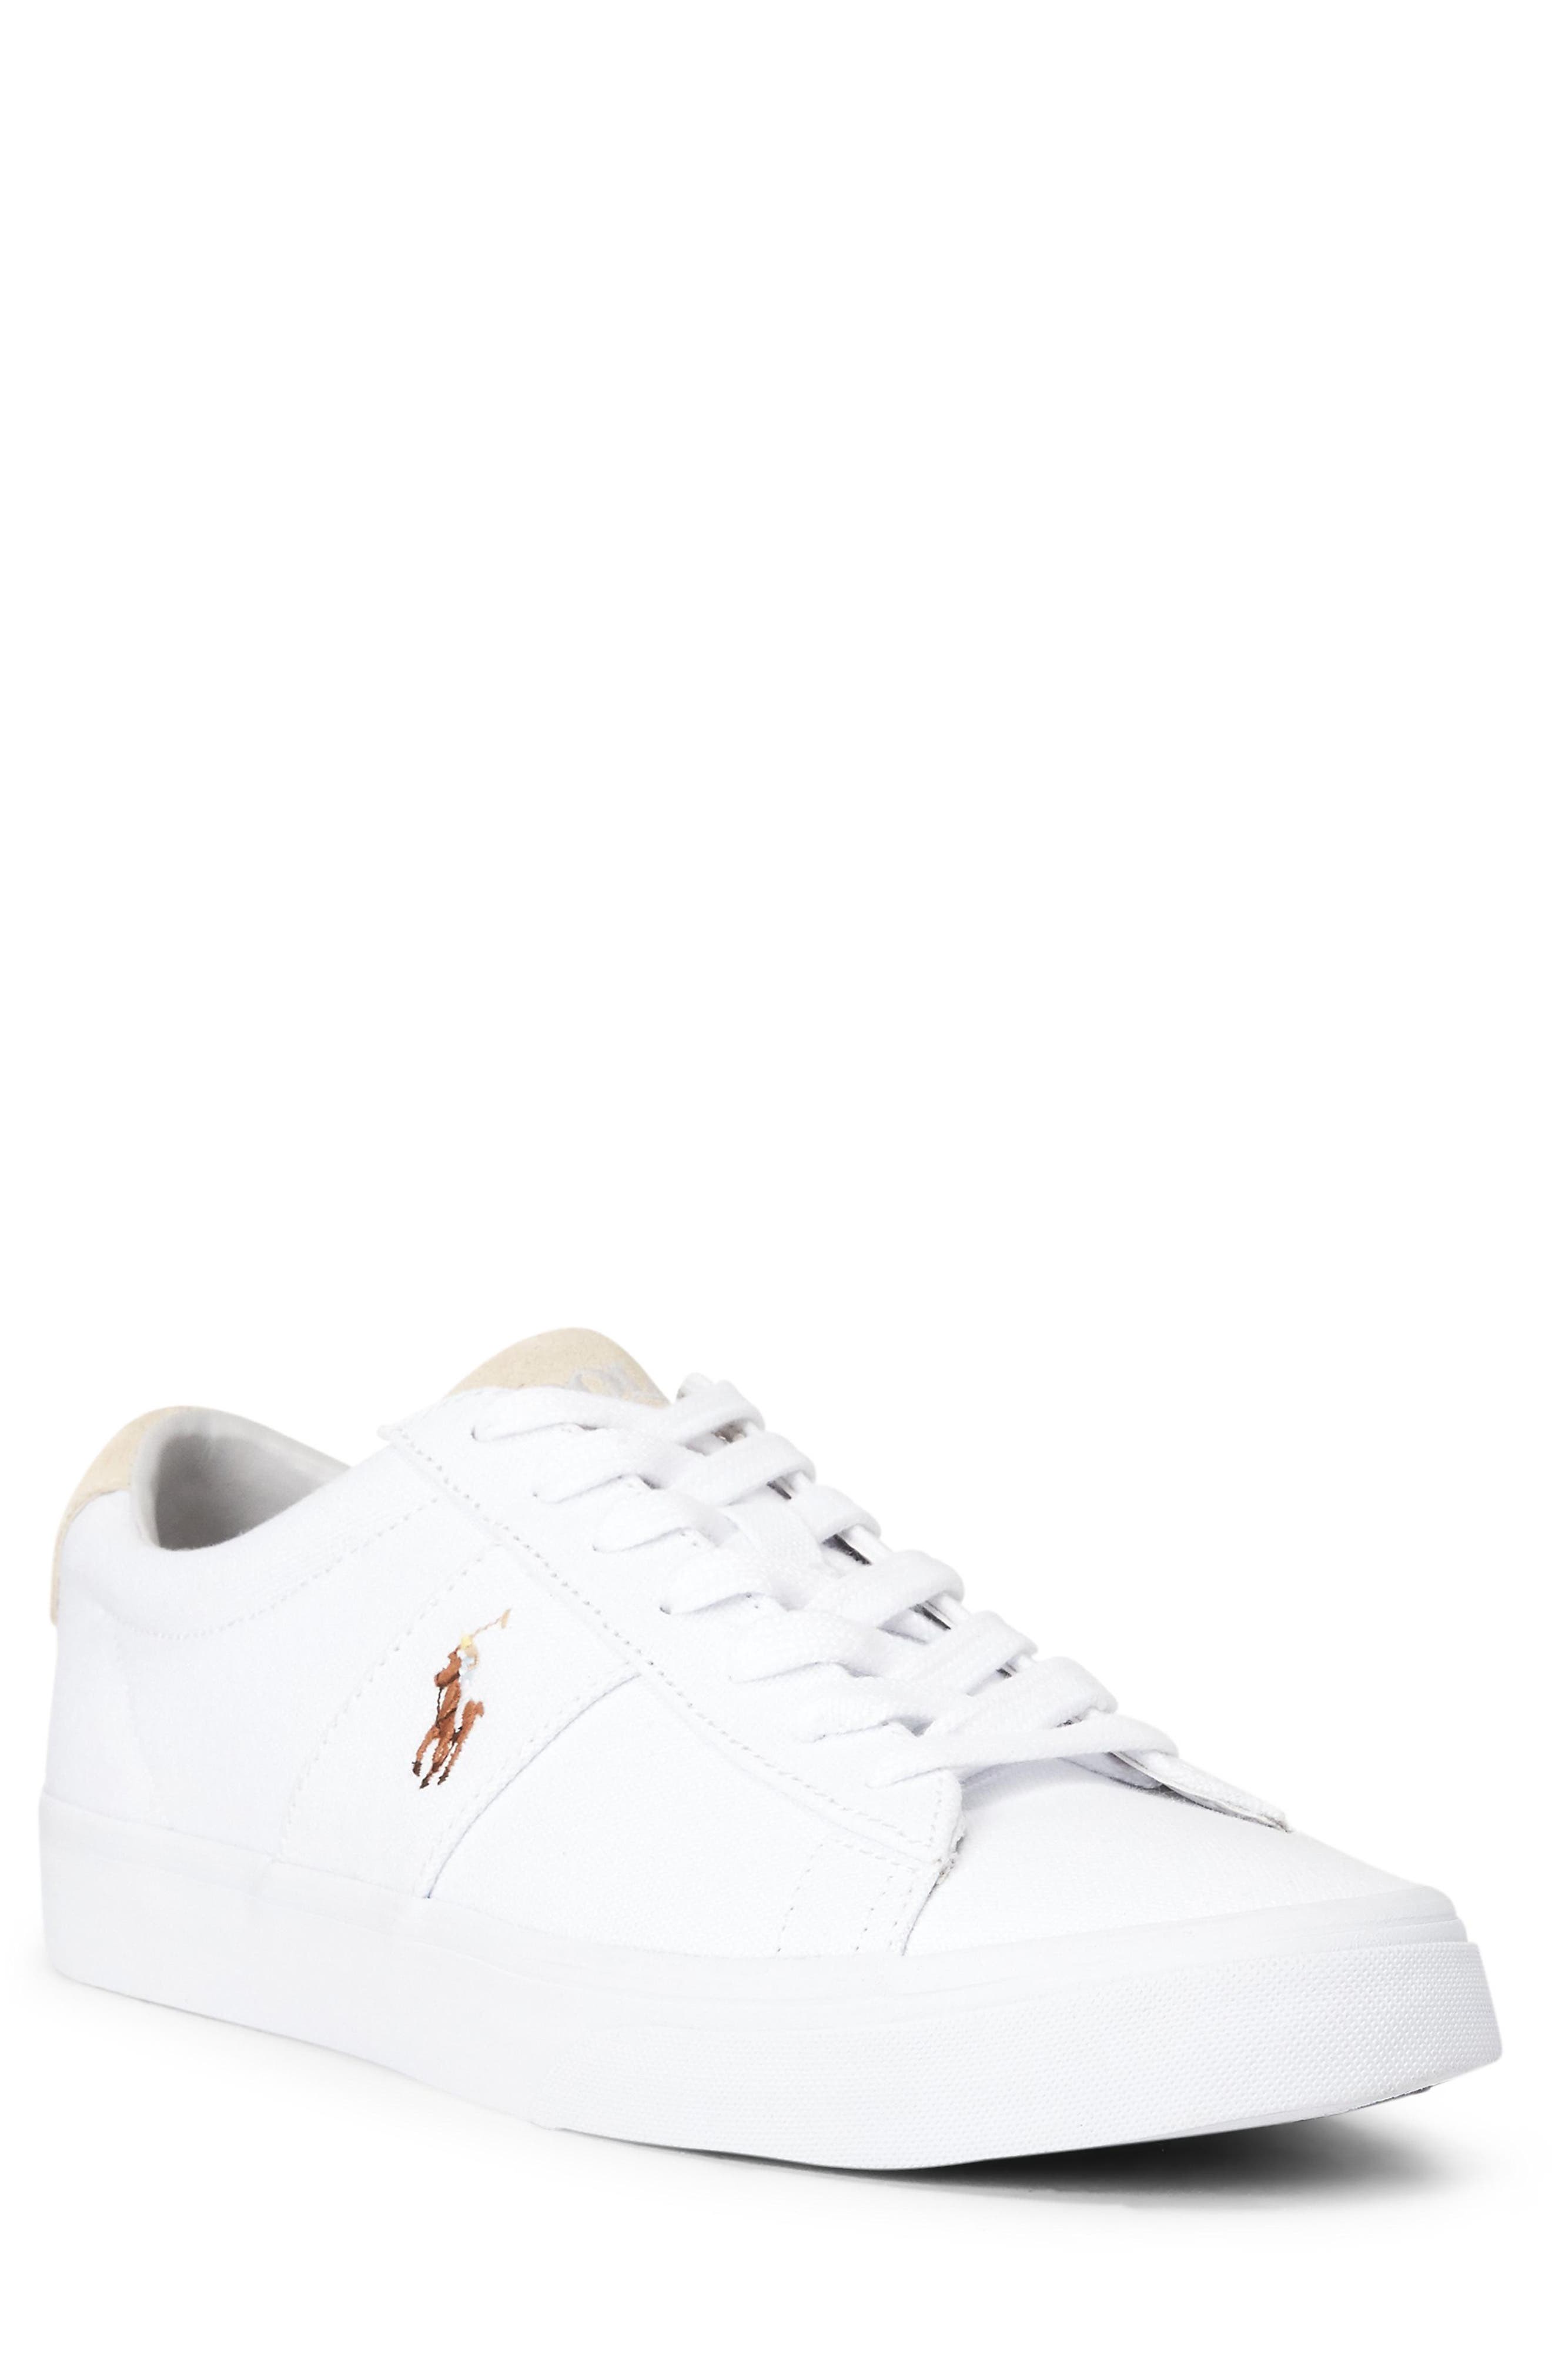 white polo shoes men's